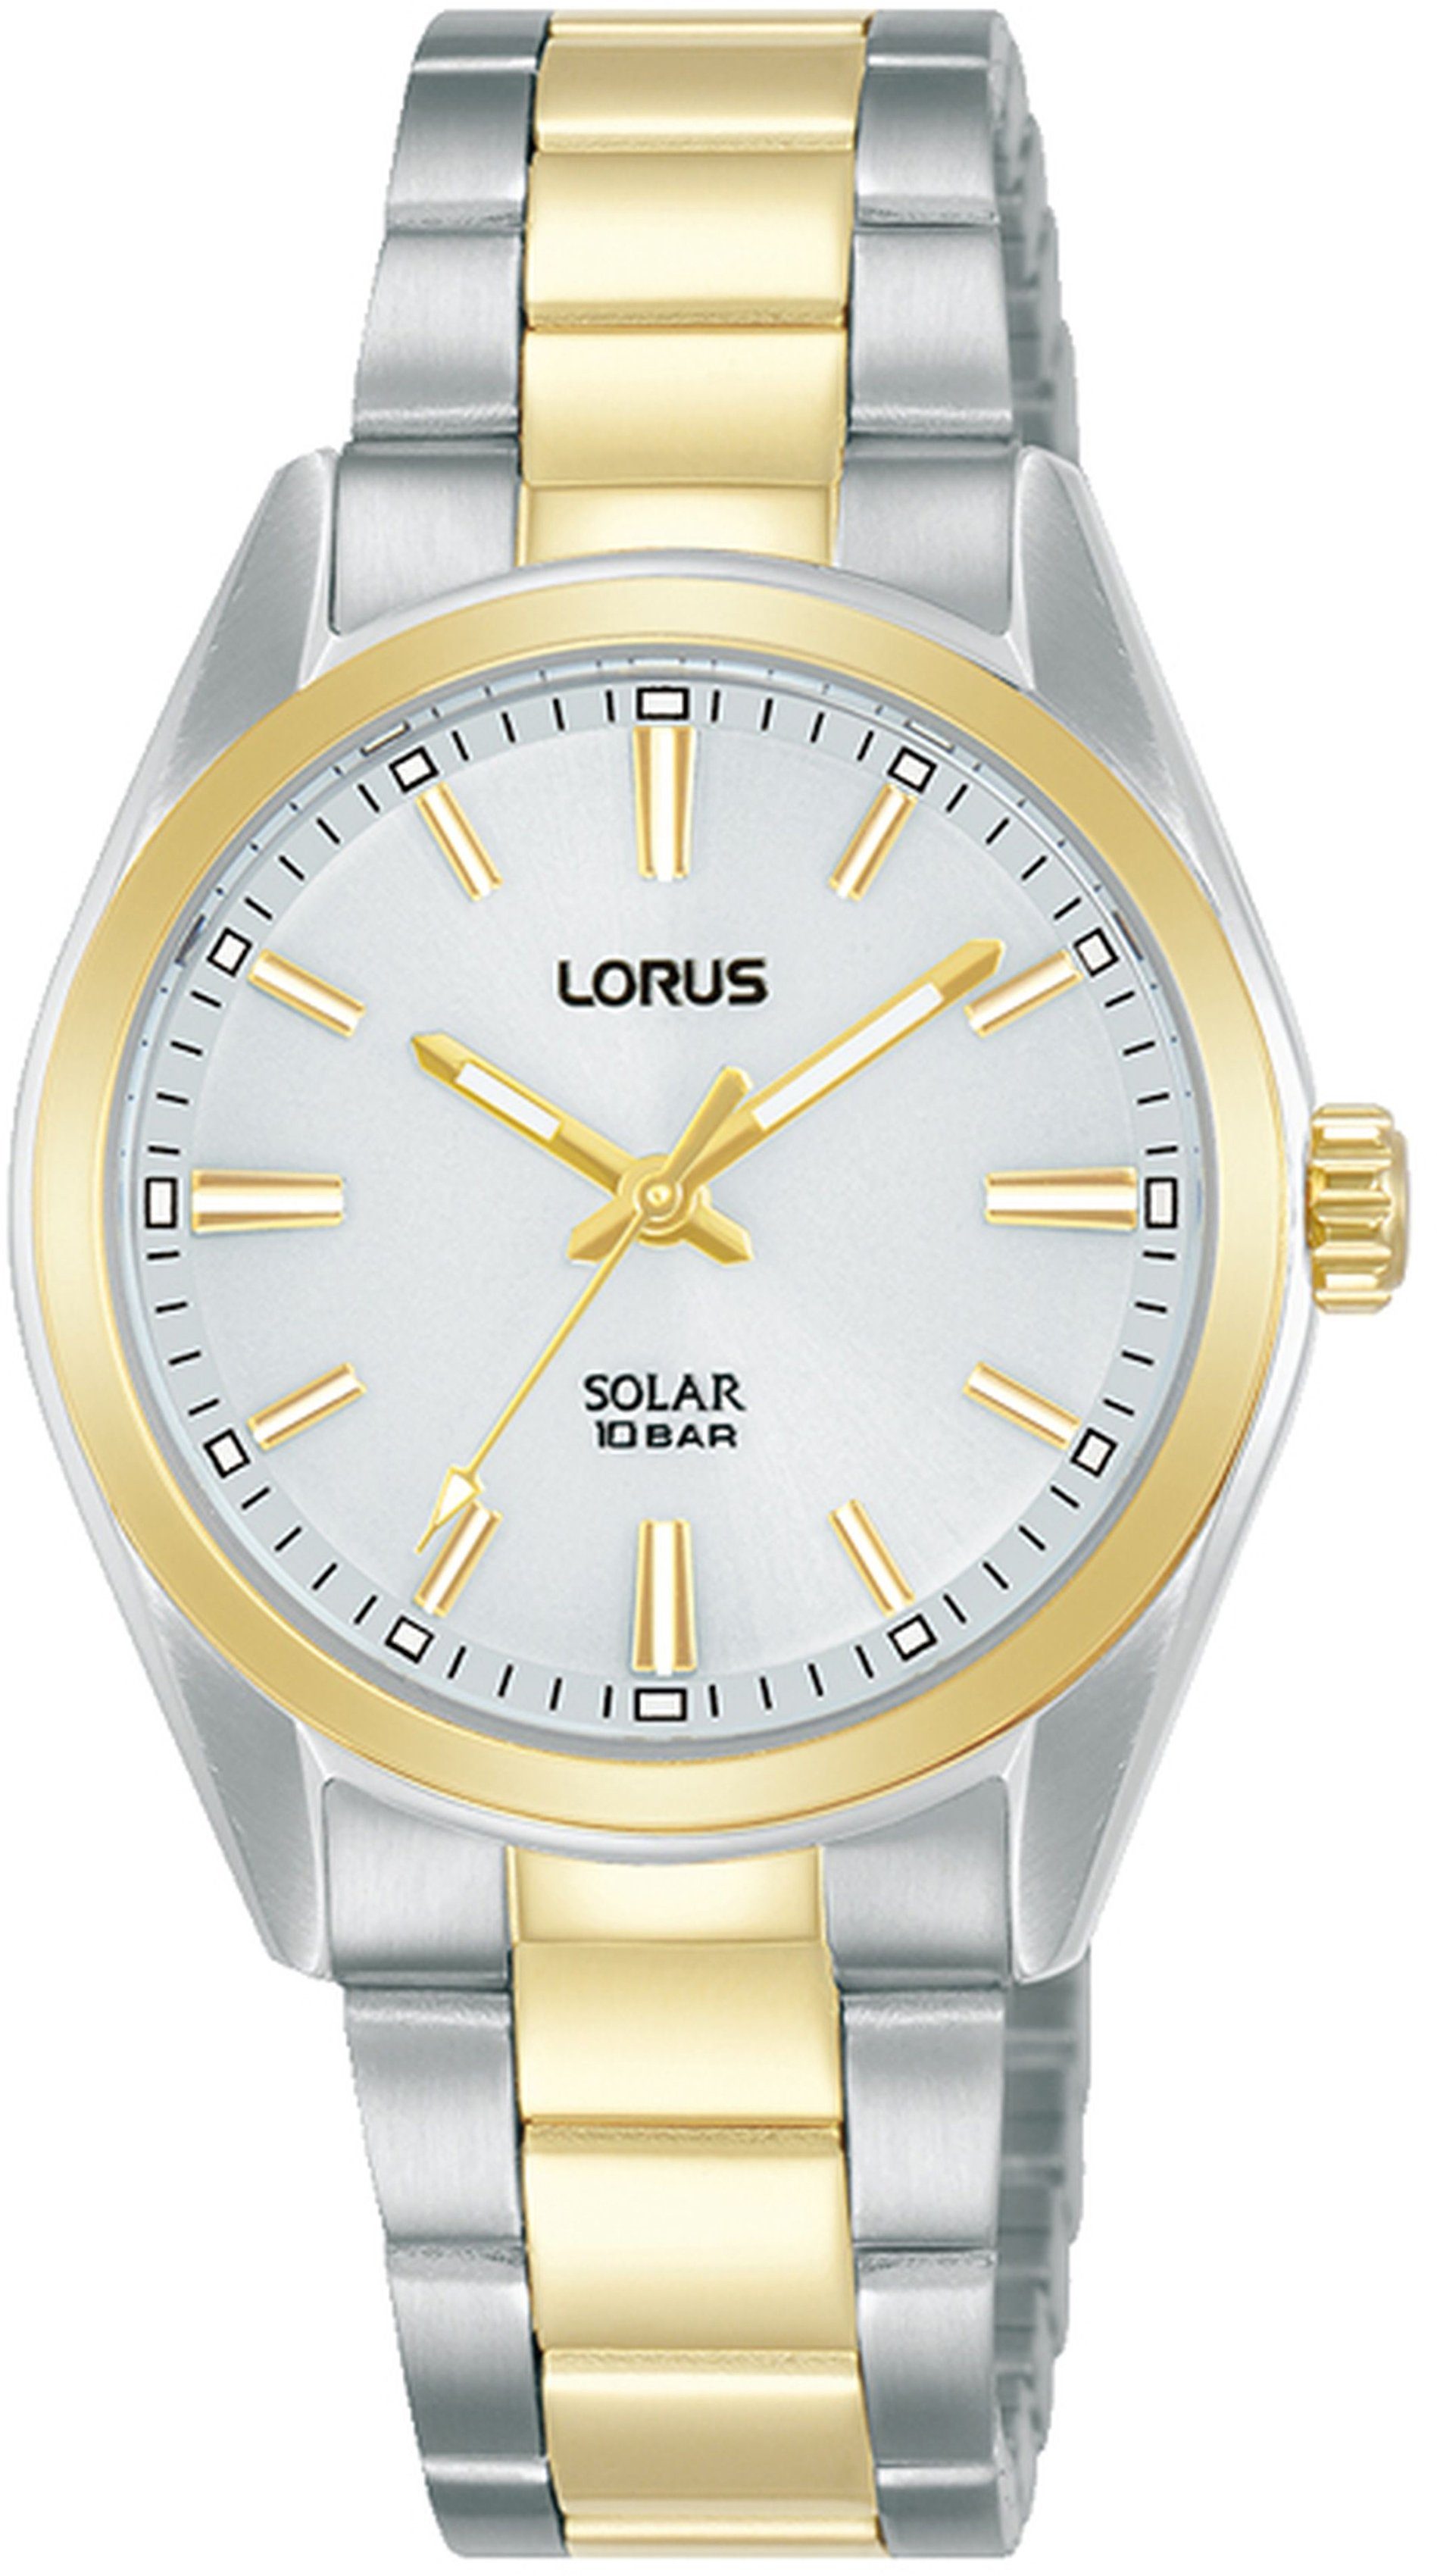 LORUS Solaruhr RY506AX9, Armbanduhr, Damenuhr